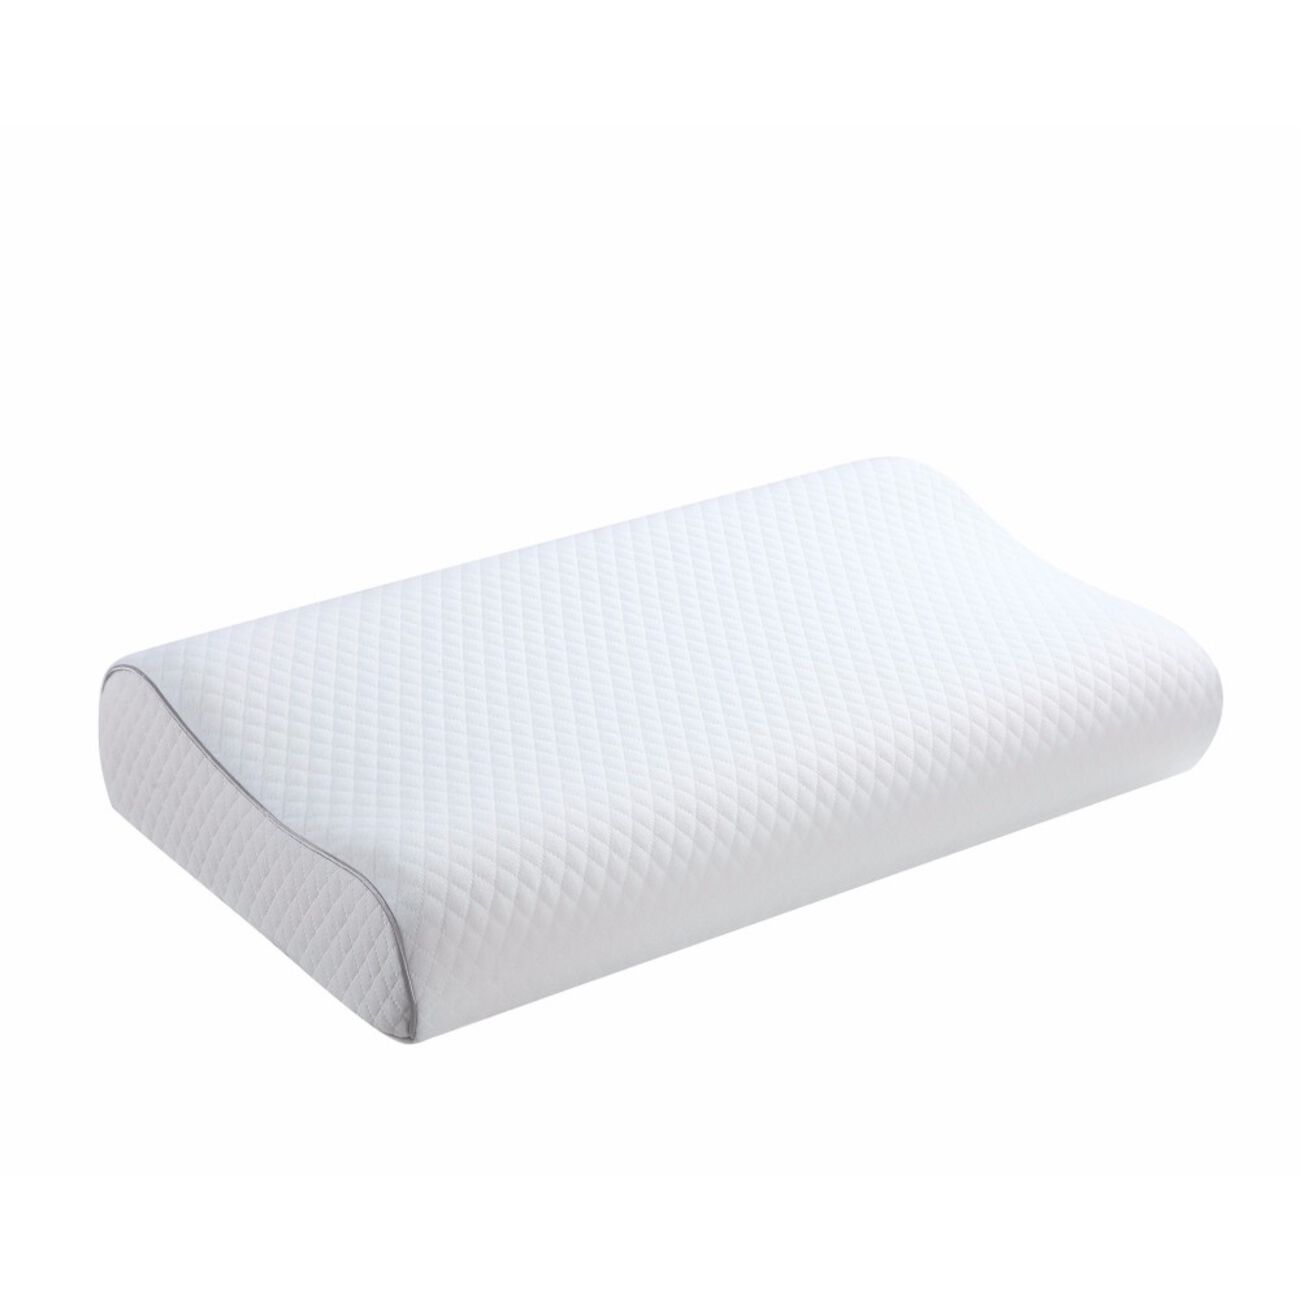 Queen Classic Memory Foam Pillow, White